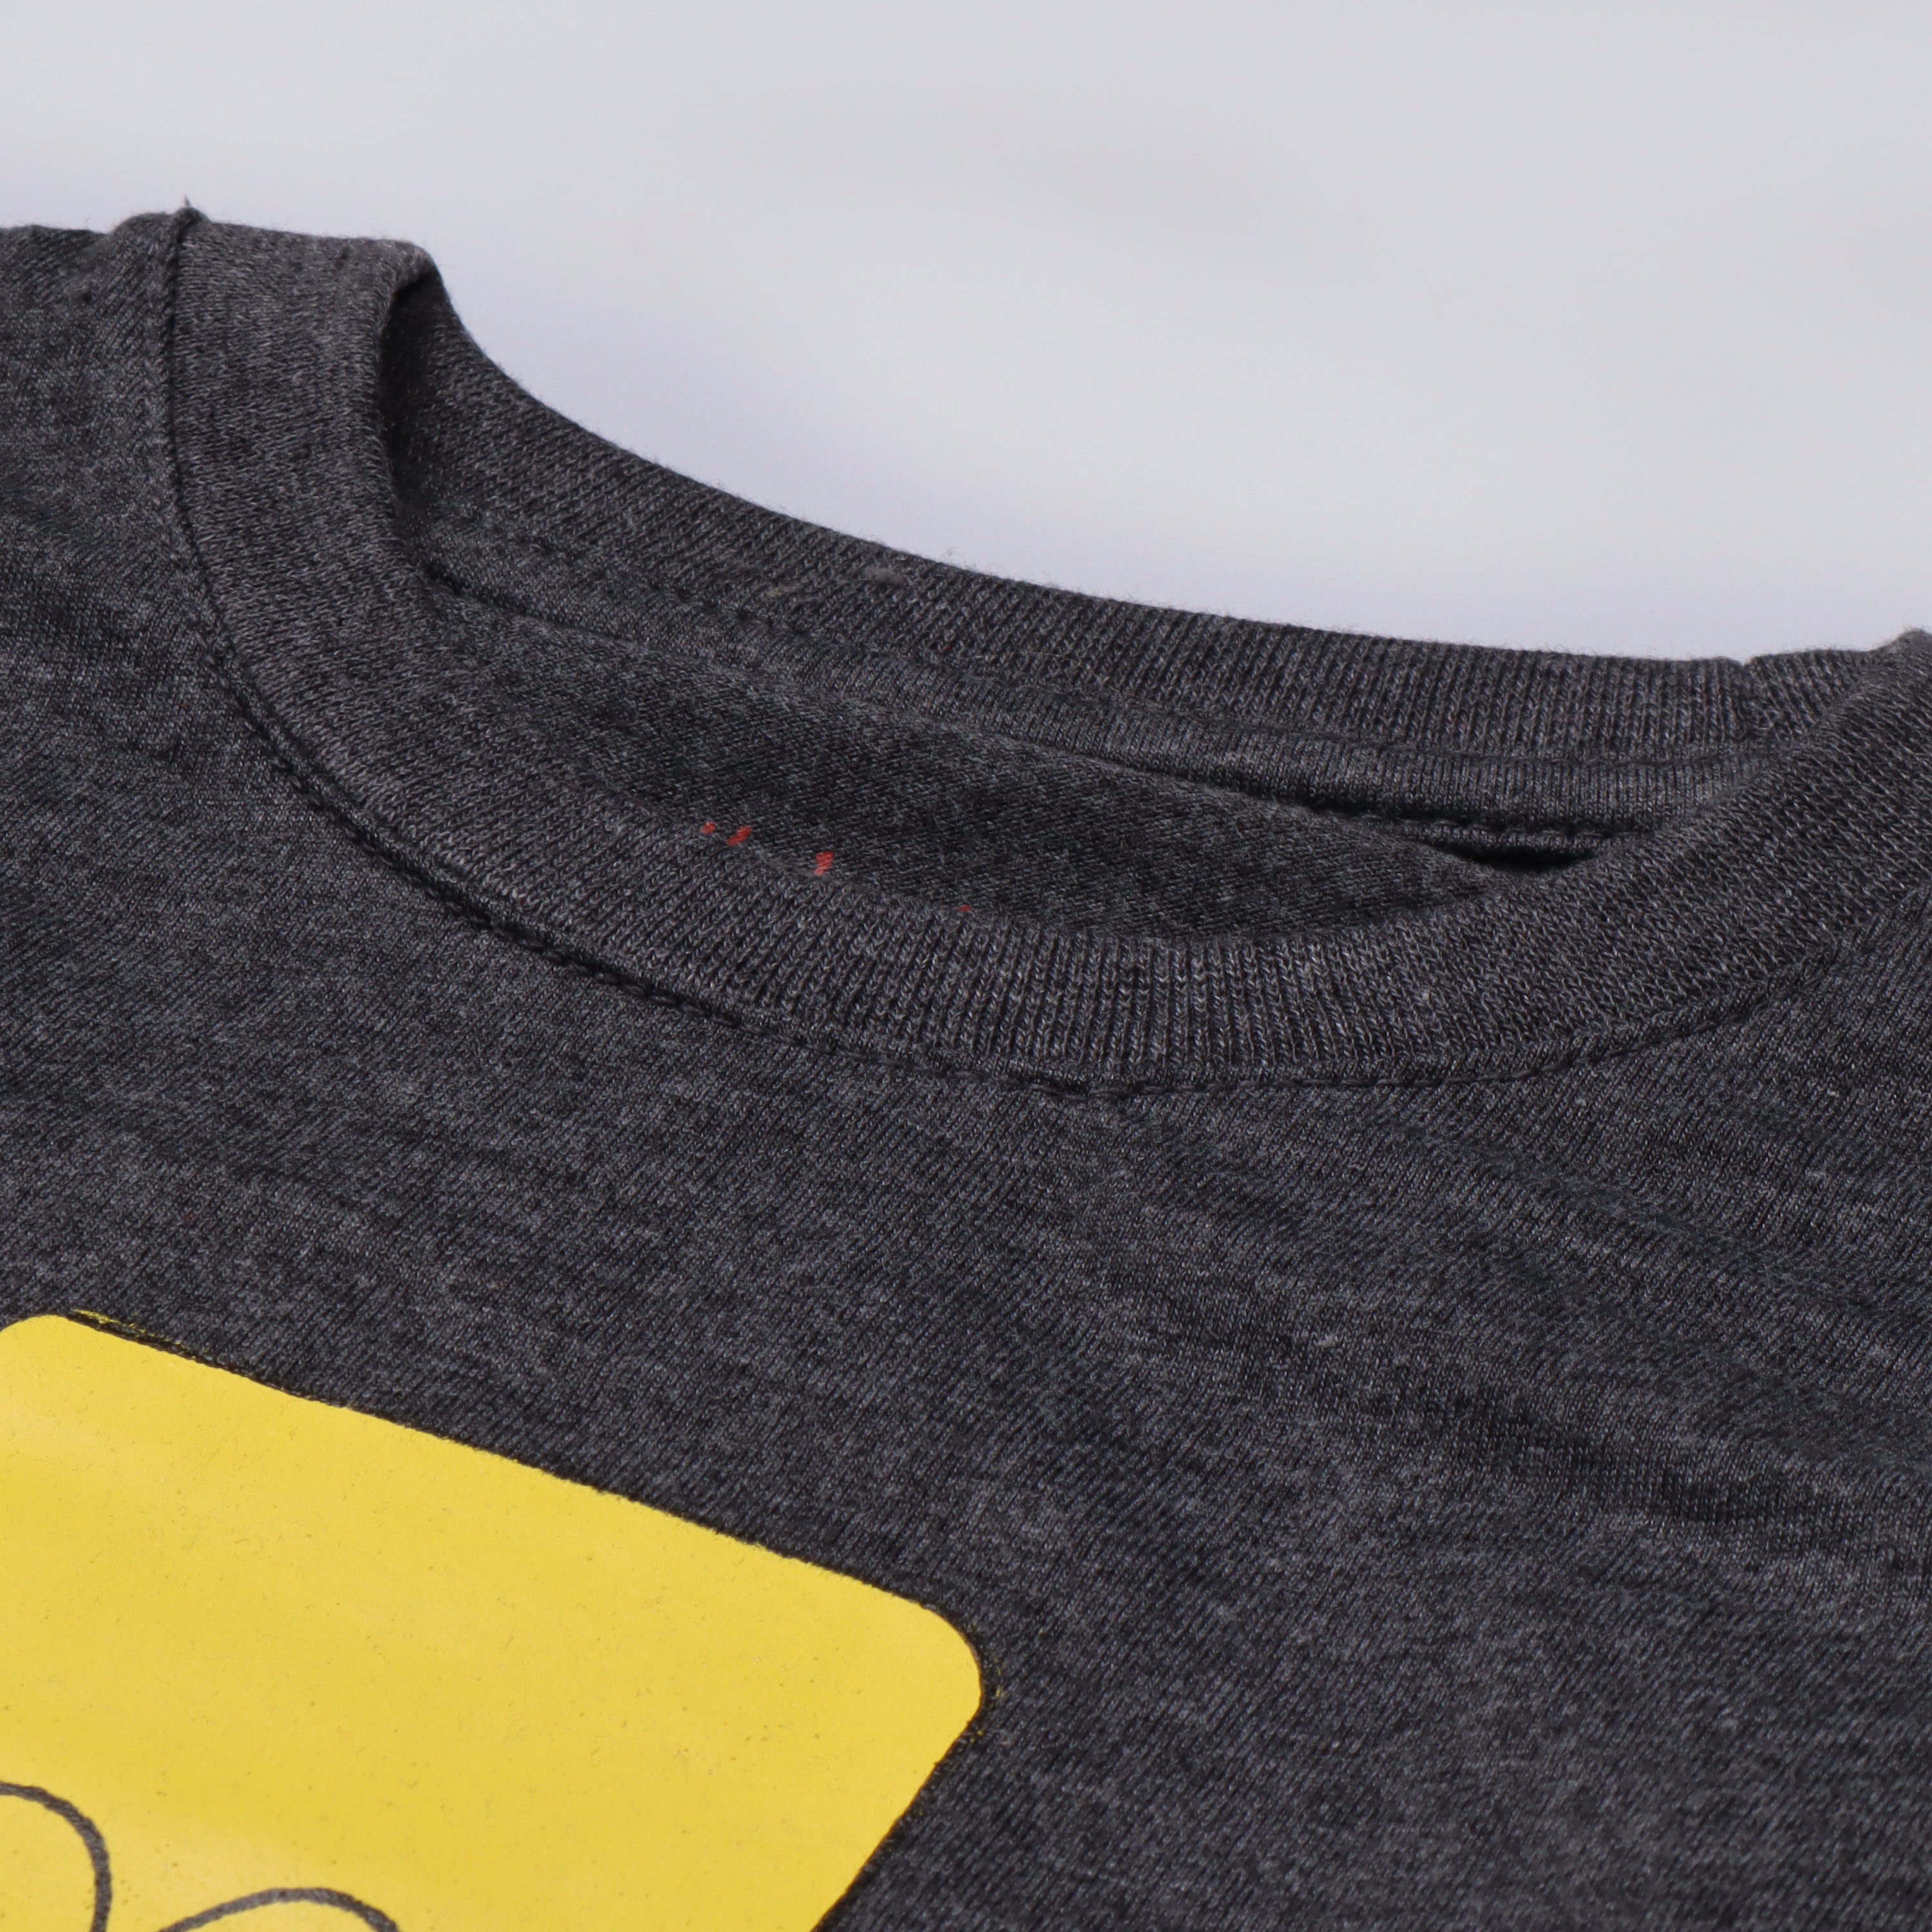 Boys Half Sleeves-Printed T-Shirt (Perfect)